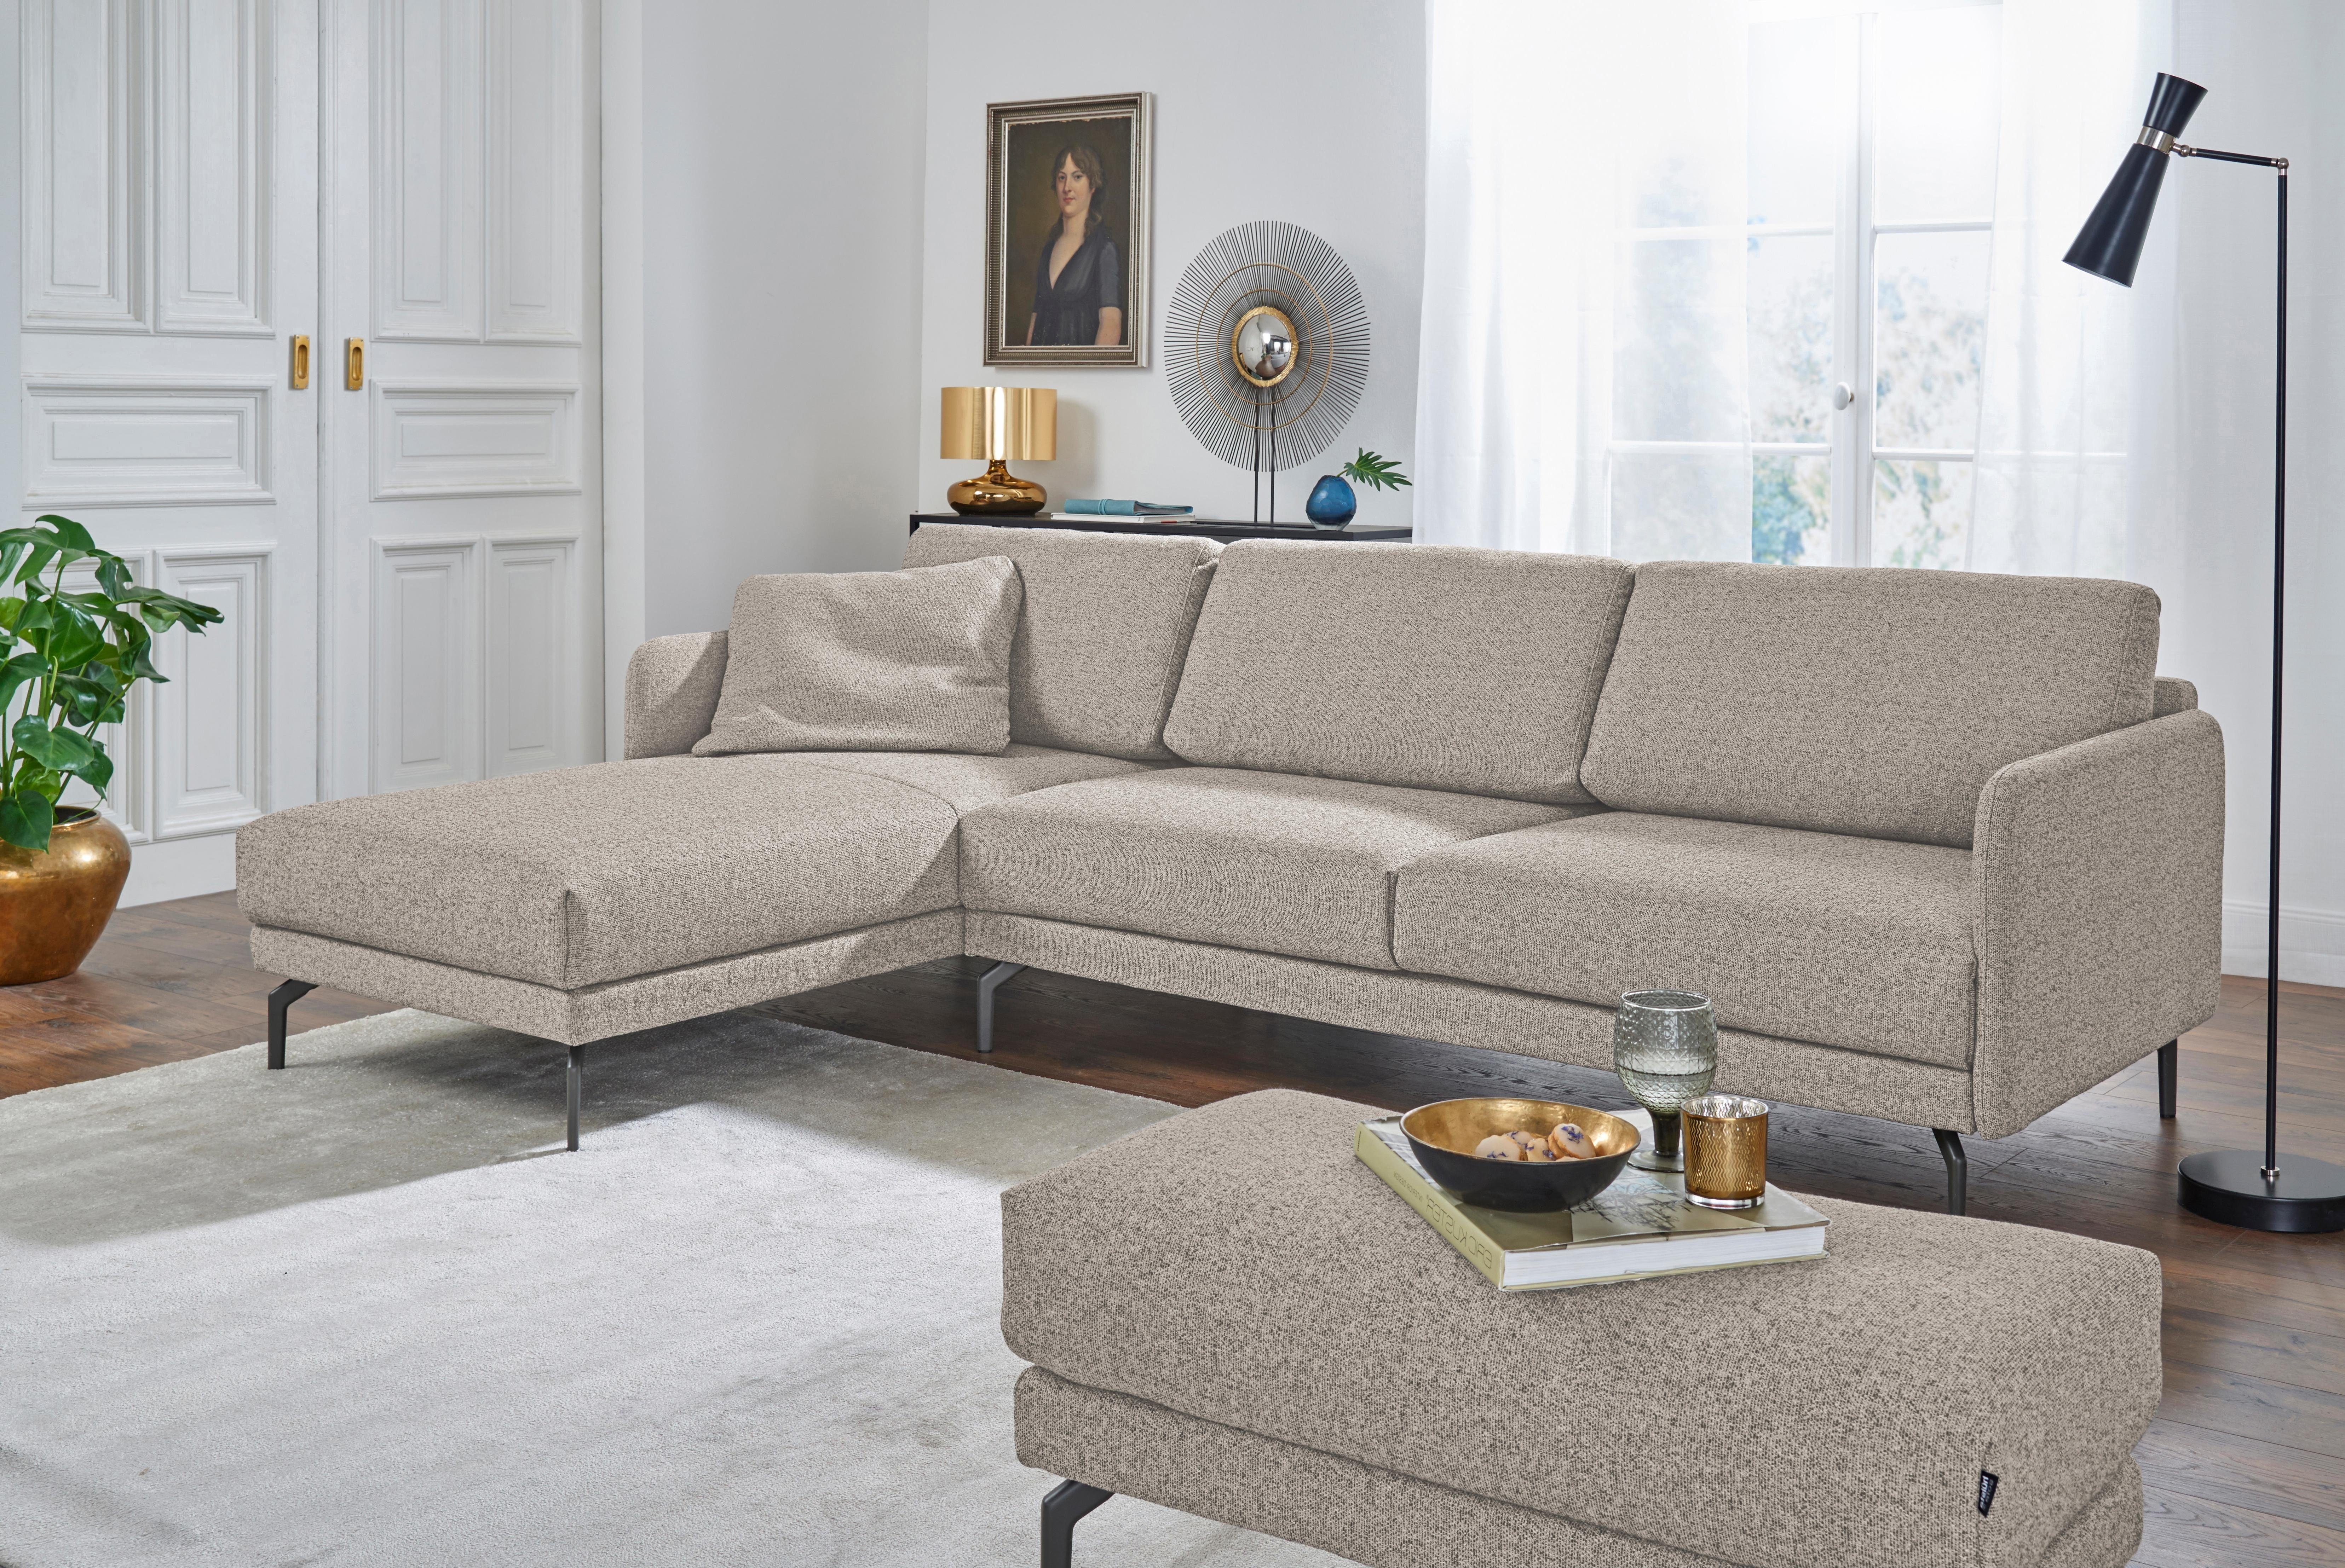 hülsta sofa Ecksofa hs.450, Armlehne sehr schmal, Breite 234 cm, Alugussfüße in umbragrau